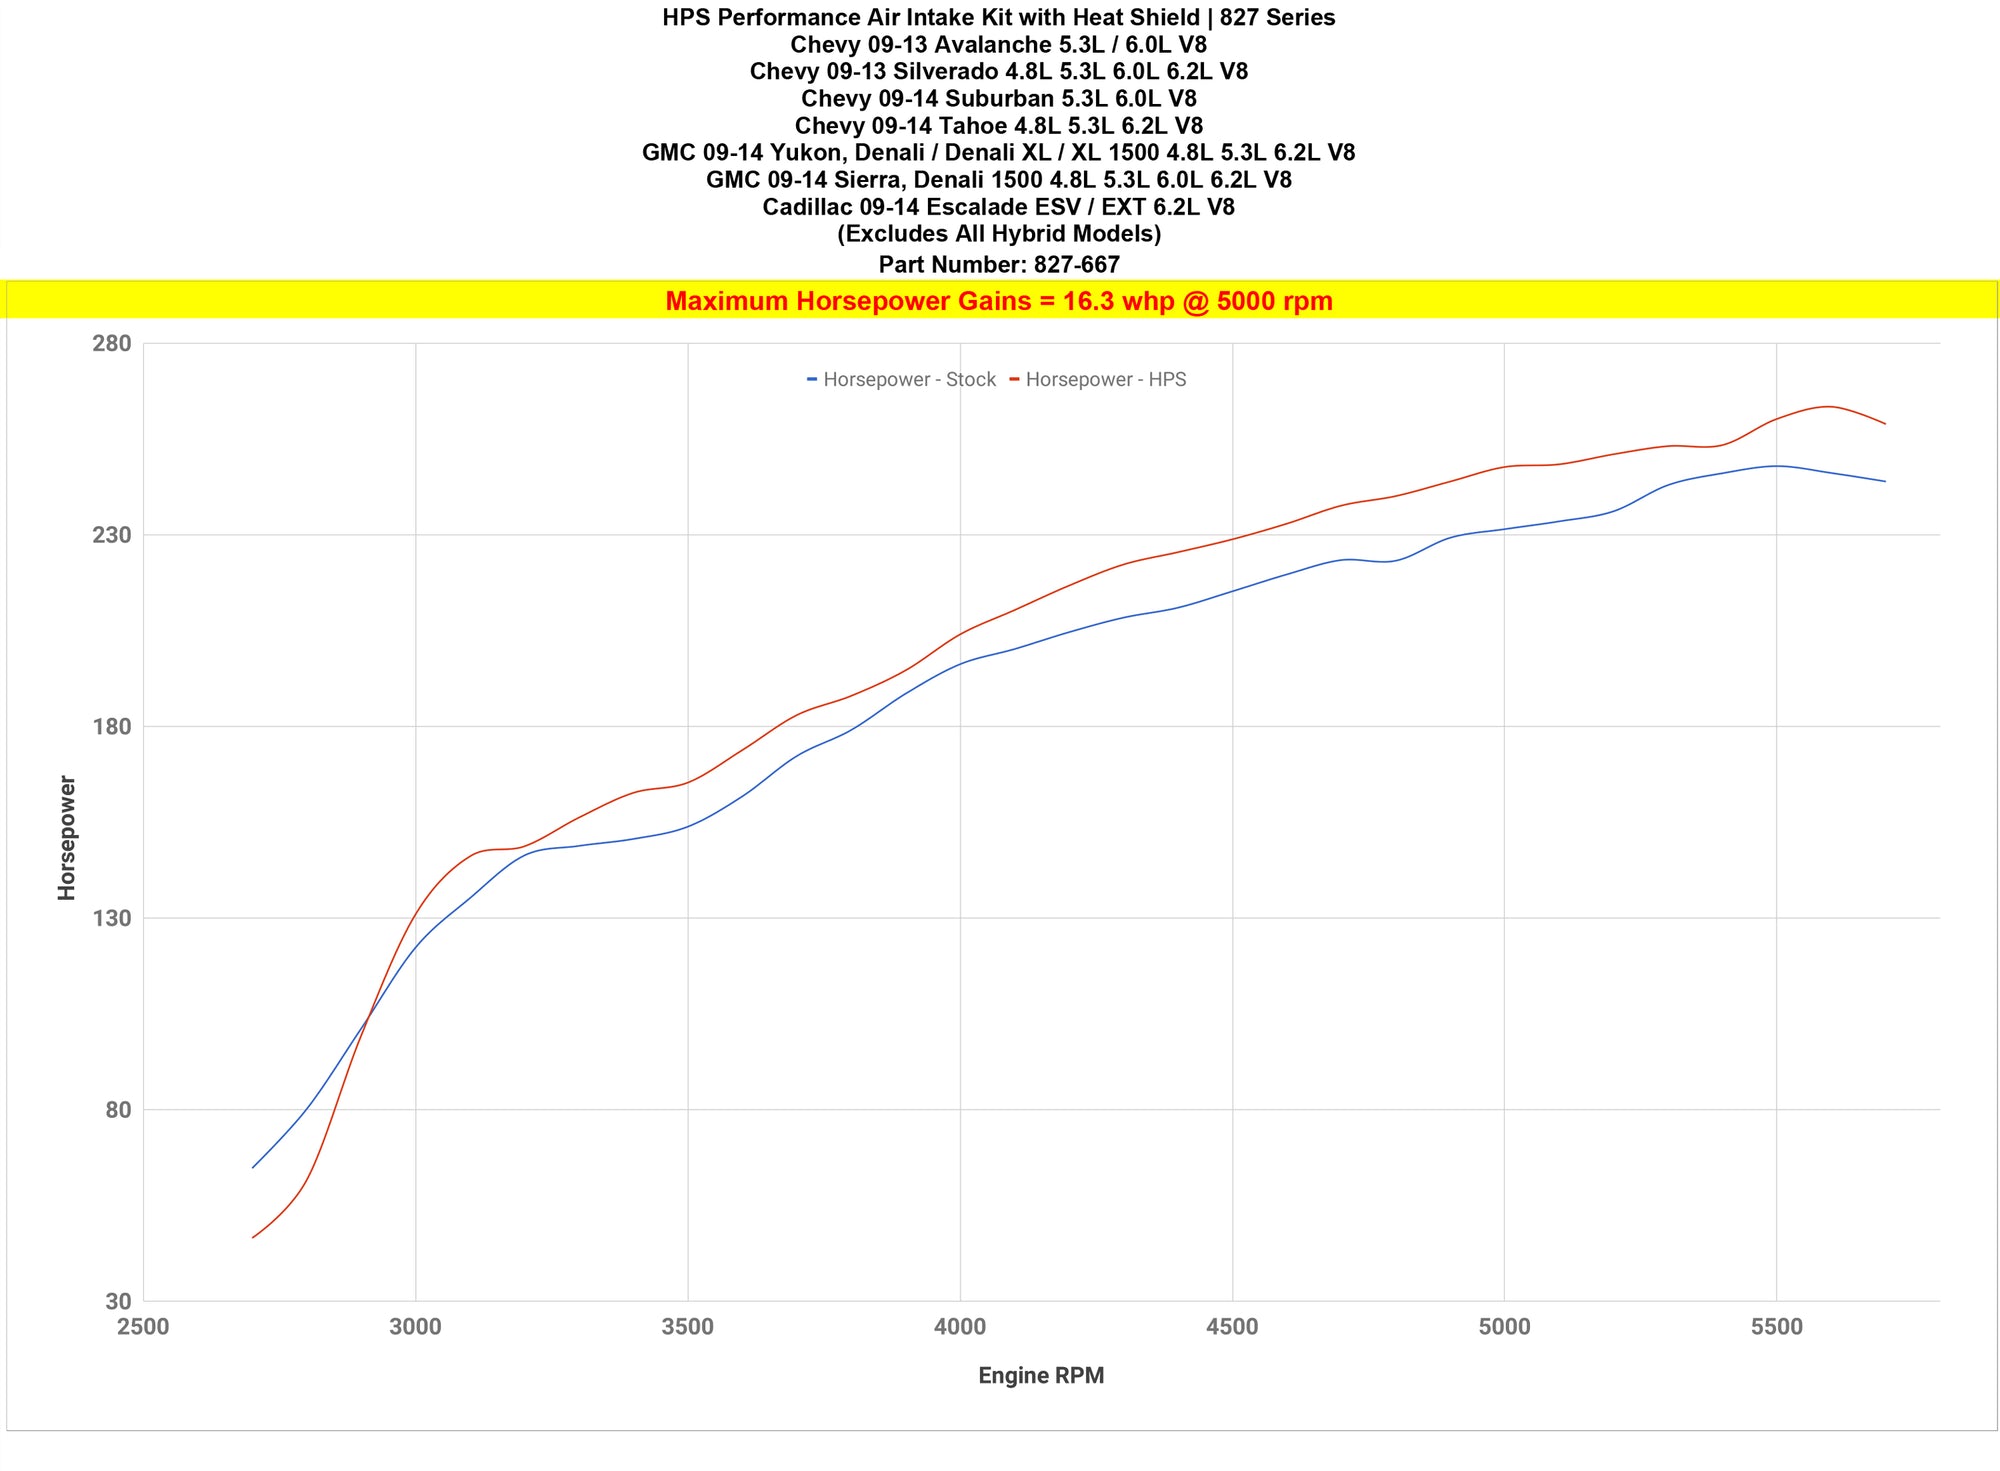 Dyno proven gains 16.3 whp HPS Performance Shortram Air Intake Kit 2009-2014 GMC Sierra 1500 4.8L 5.3L 6.0L 6.2L V8 (Excludes Hybrid) 827-667WB